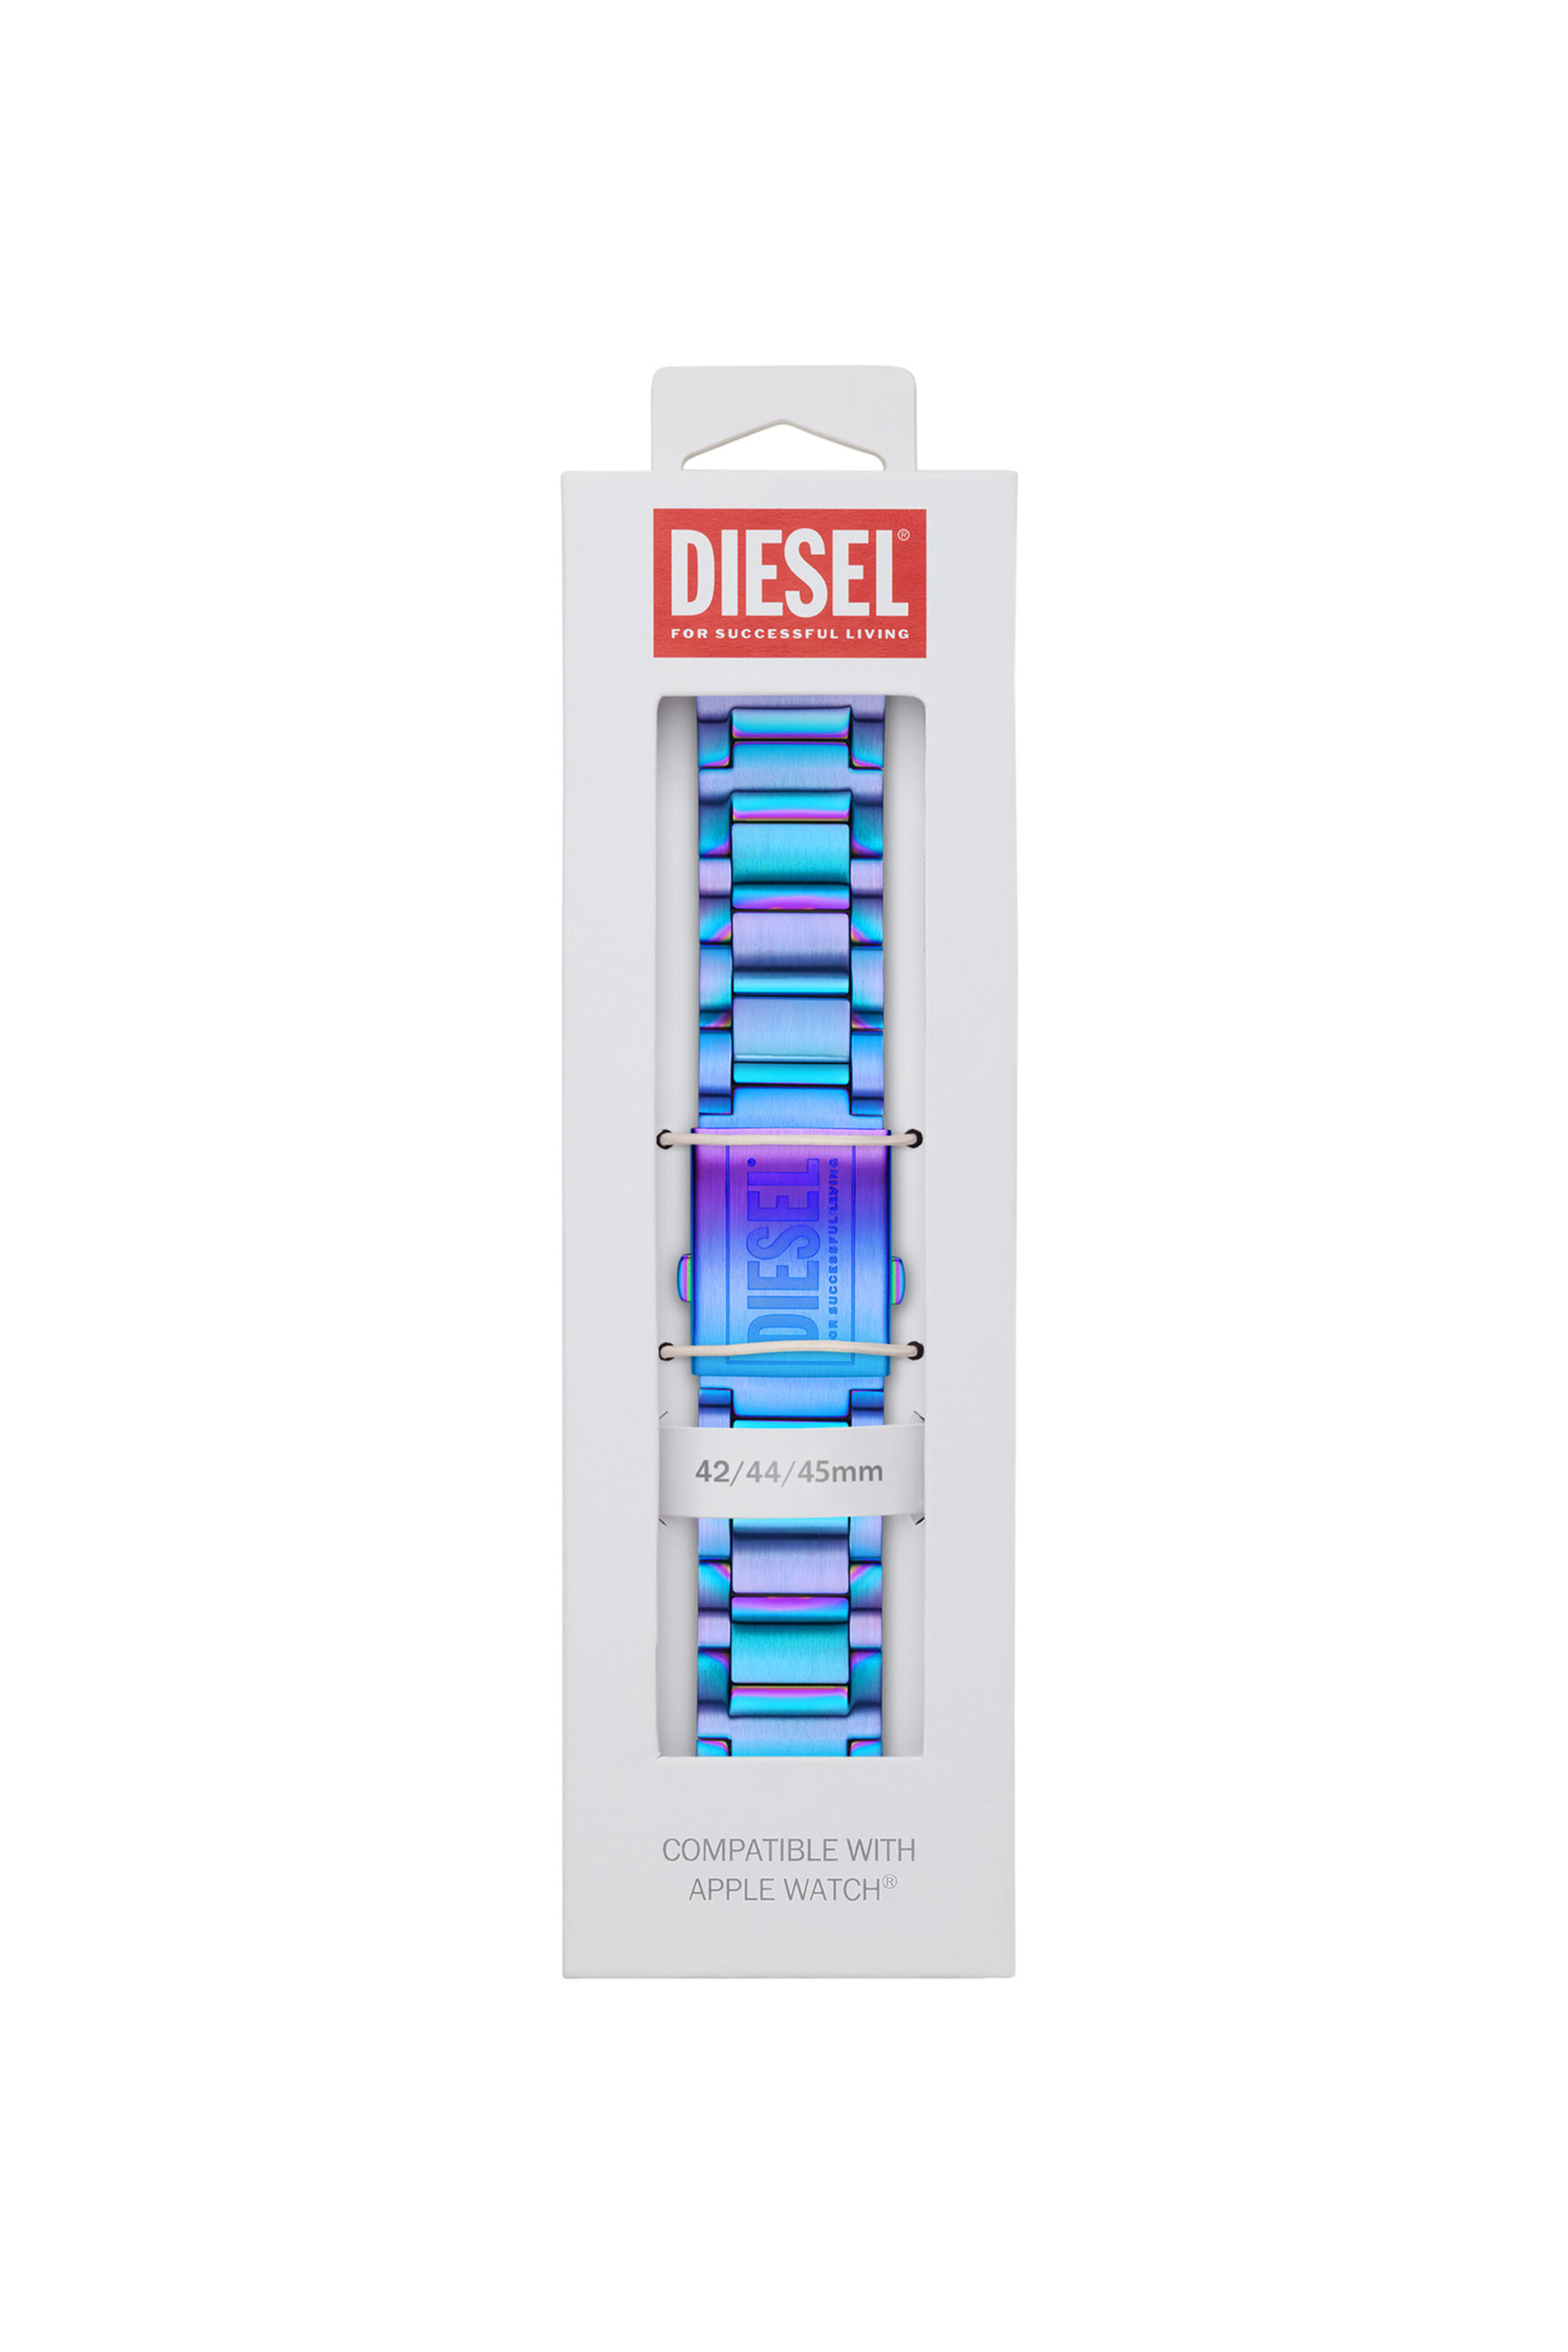 Diesel - DSS007, ブルー - Image 2